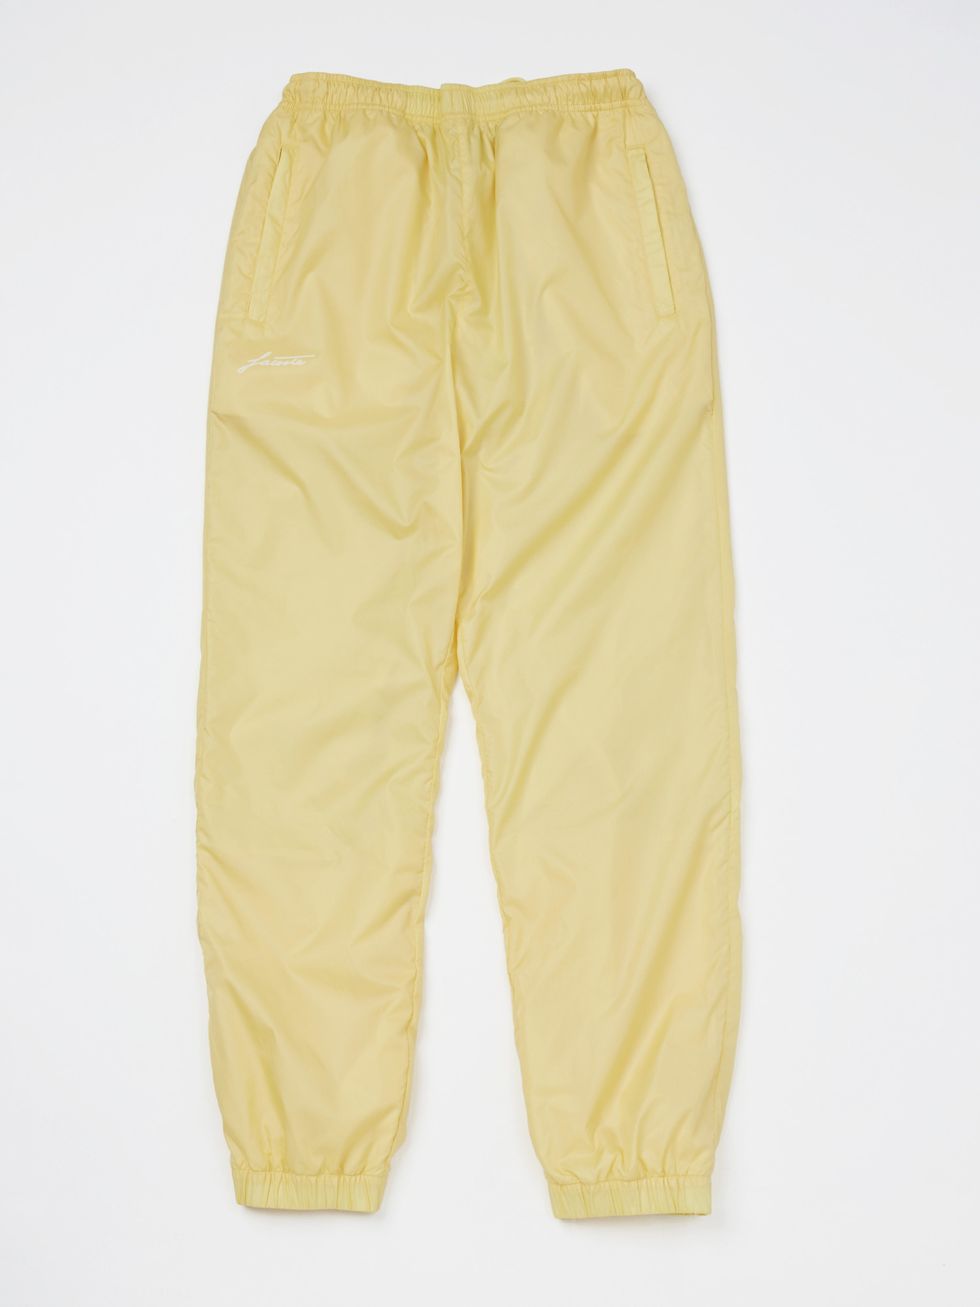 Clothing, Yellow, Textile, Khaki, Beige, Tan, Pocket, Active pants, Active shorts, Bermuda shorts, 